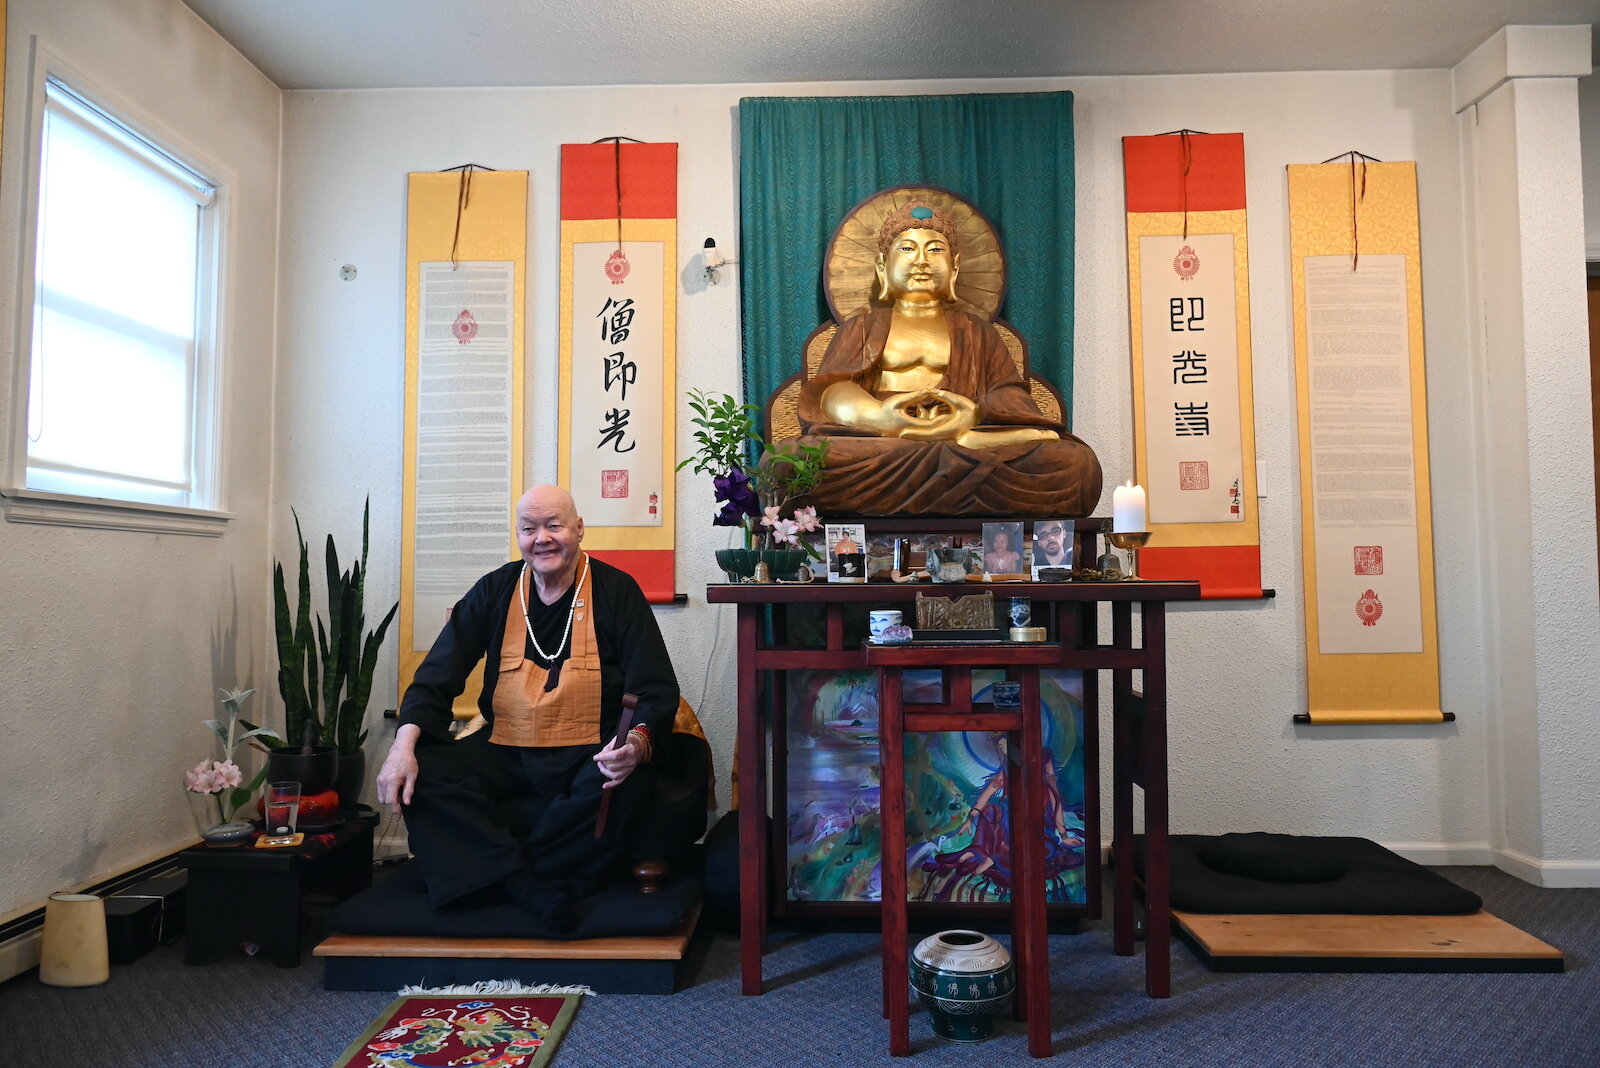 Sokuzan is the founding abbot of the SokukoJi Buddhist Temple Monastery in Battle Creek.